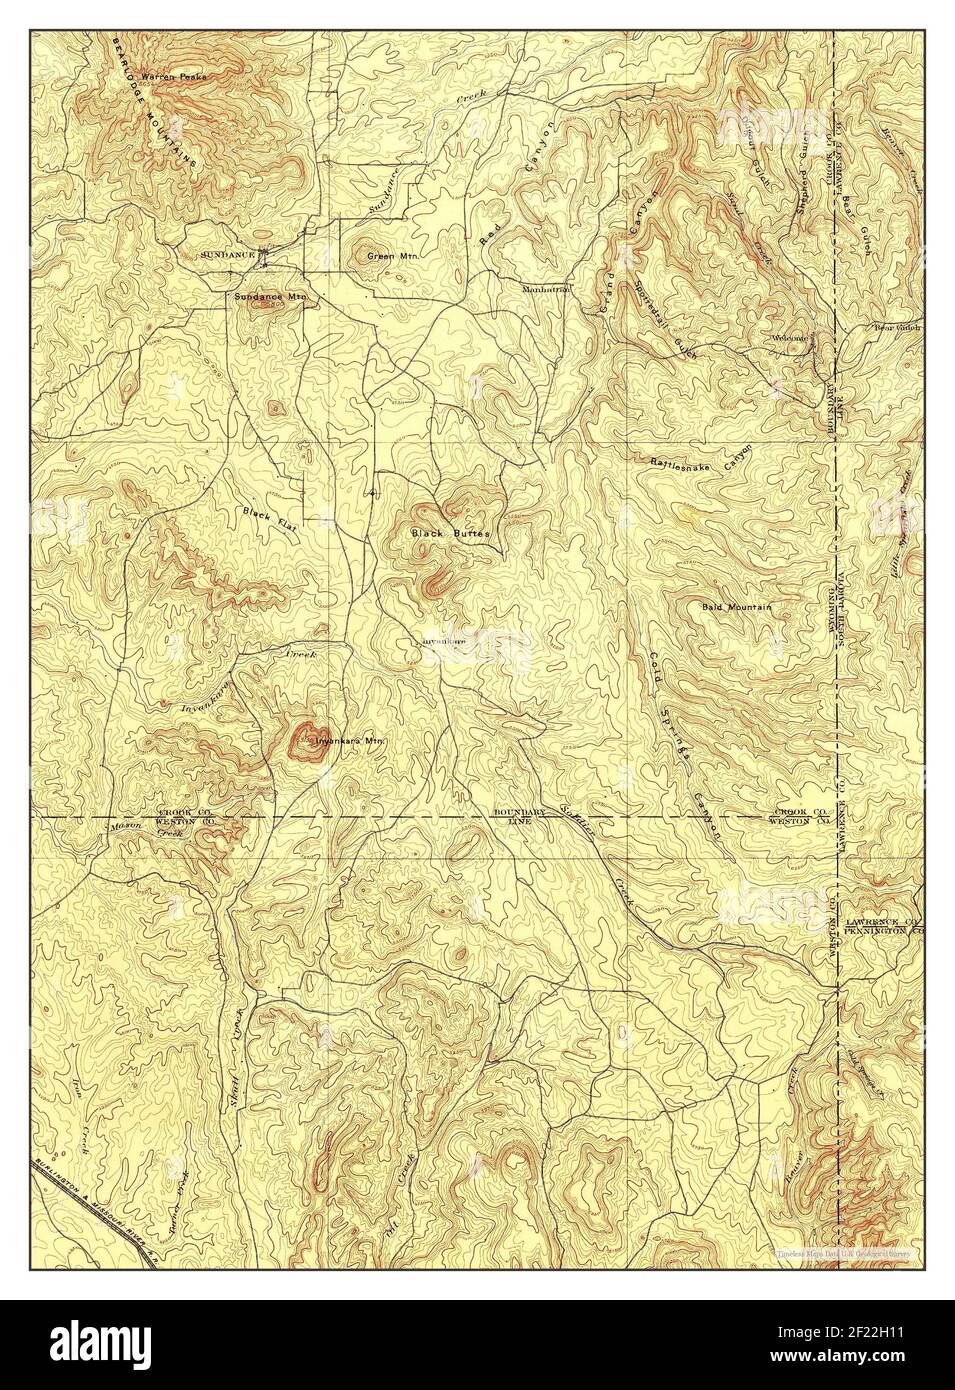 Sundance, Wyoming, map 1898, 1:125000, United States of America by Timeless Maps, data U.S. Geological Survey Stock Photo